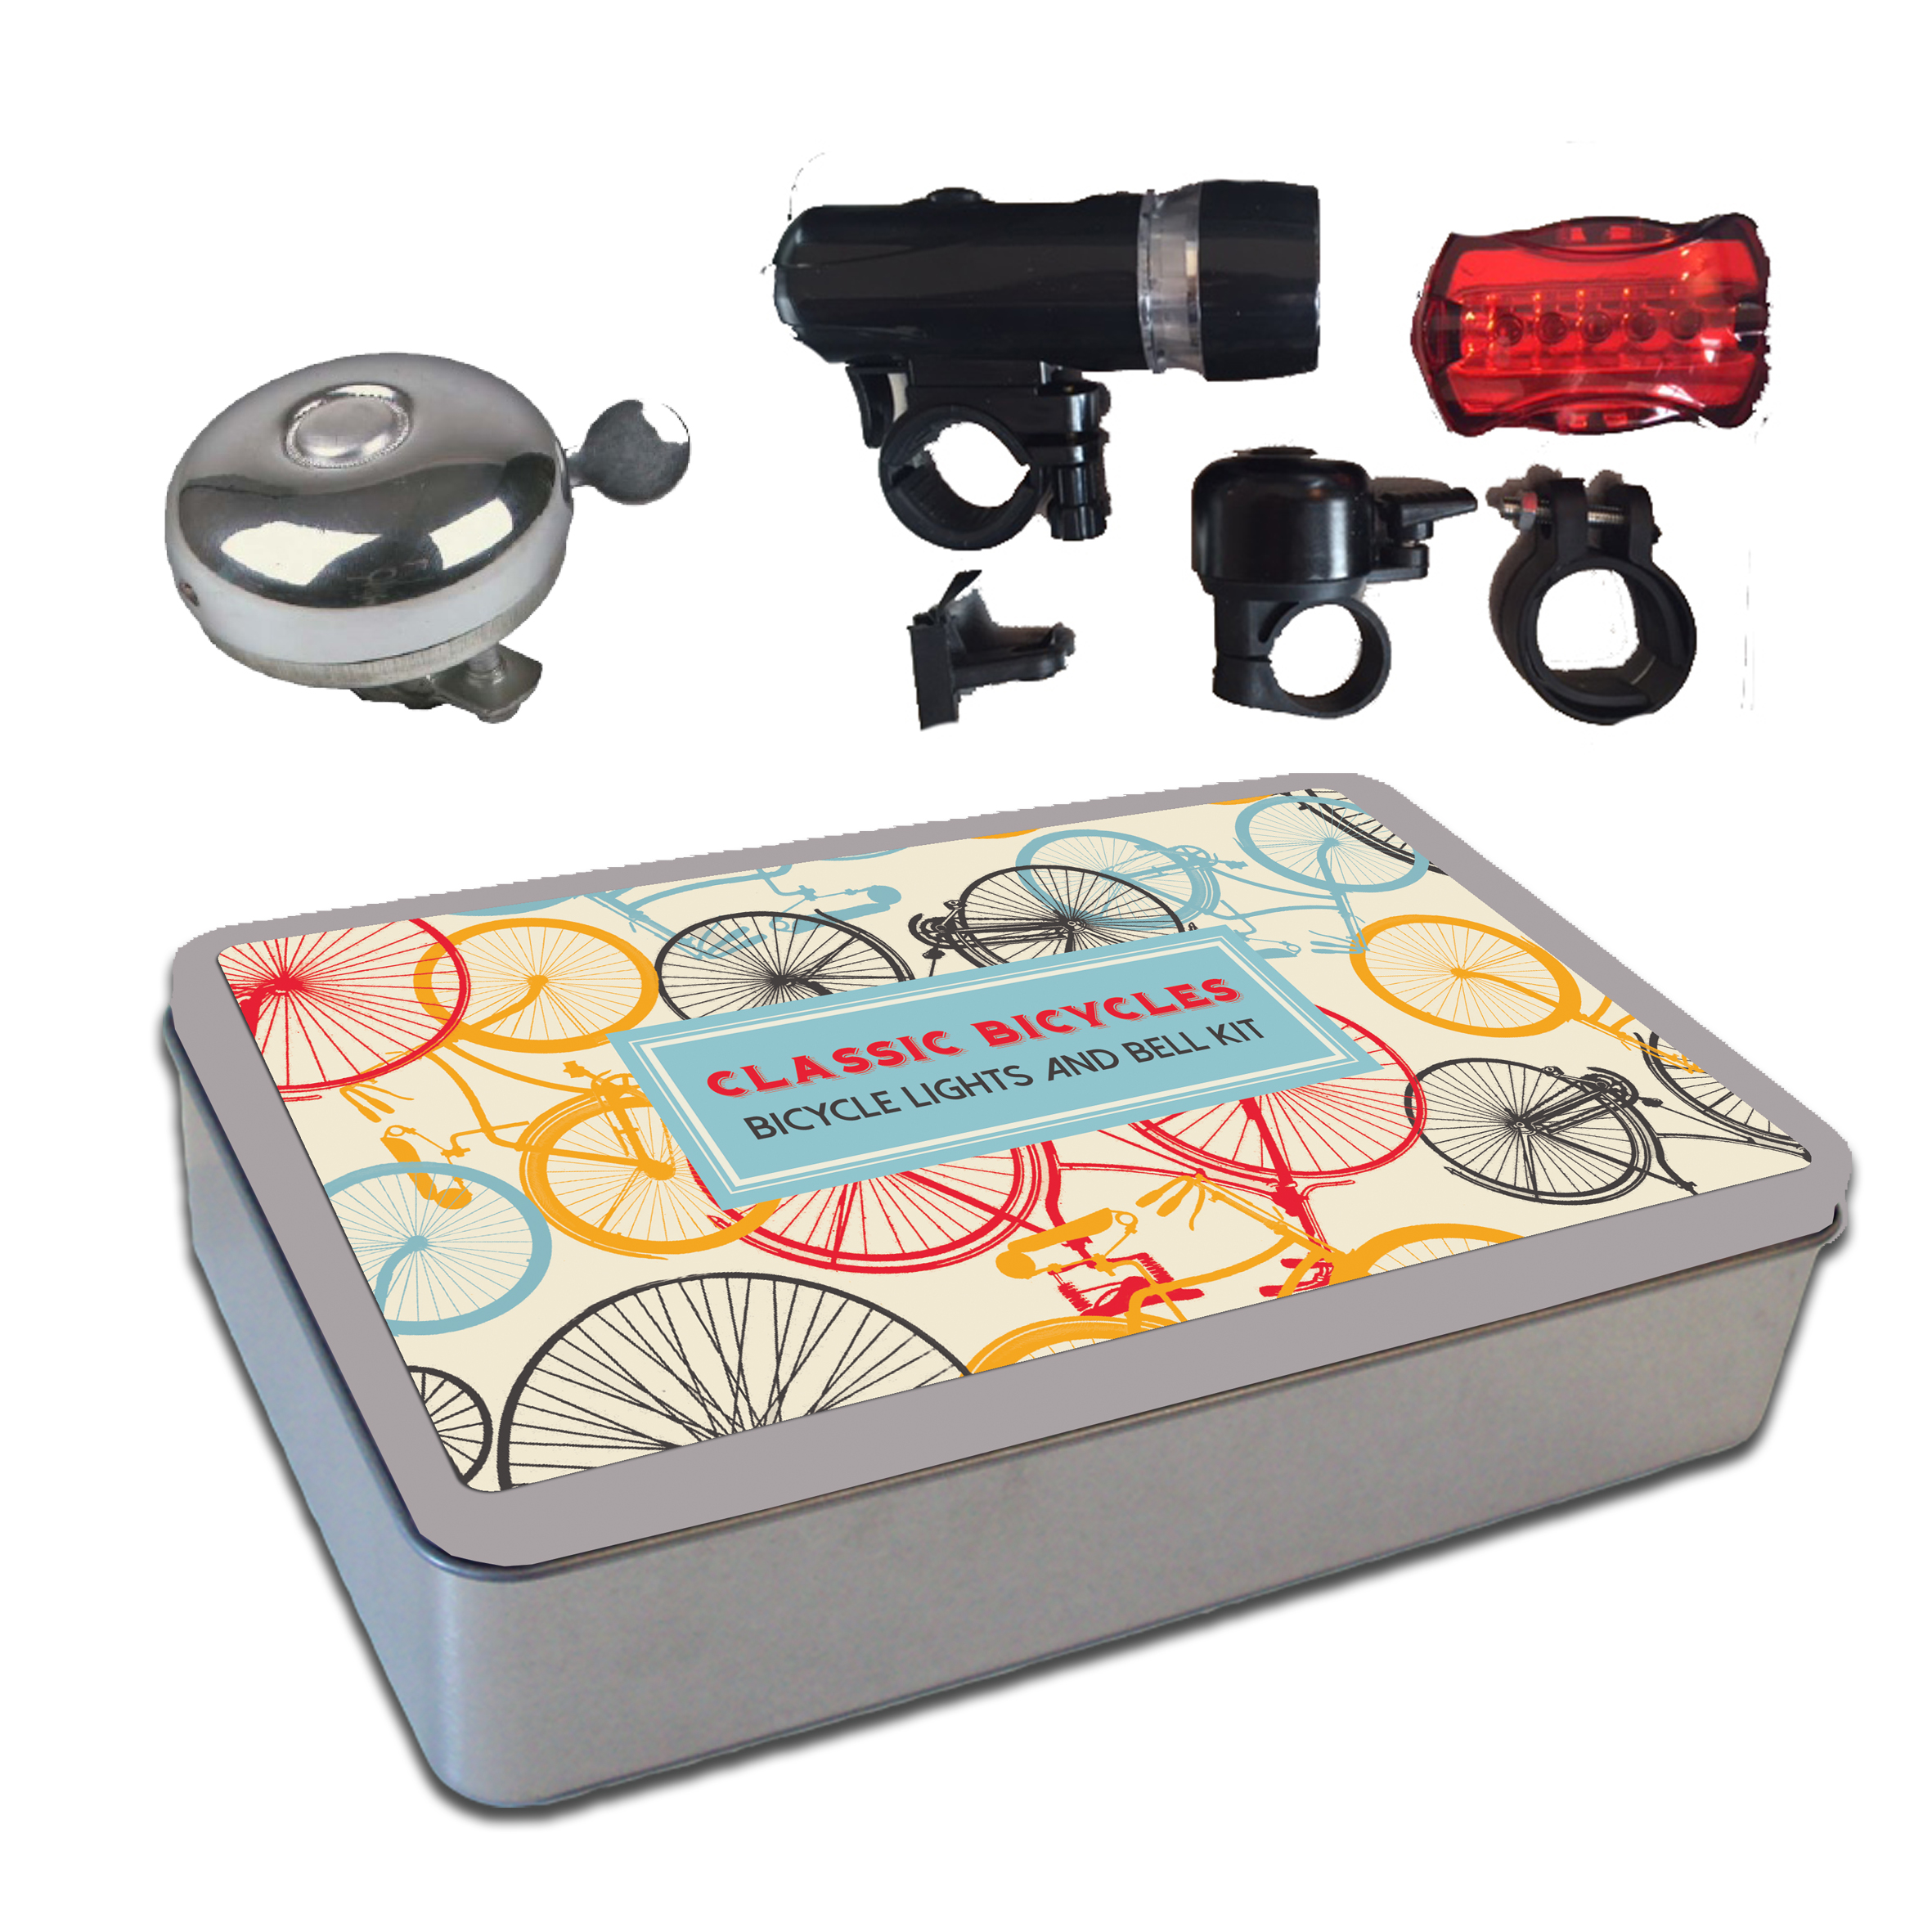 Bike lights & bell kit in a tin